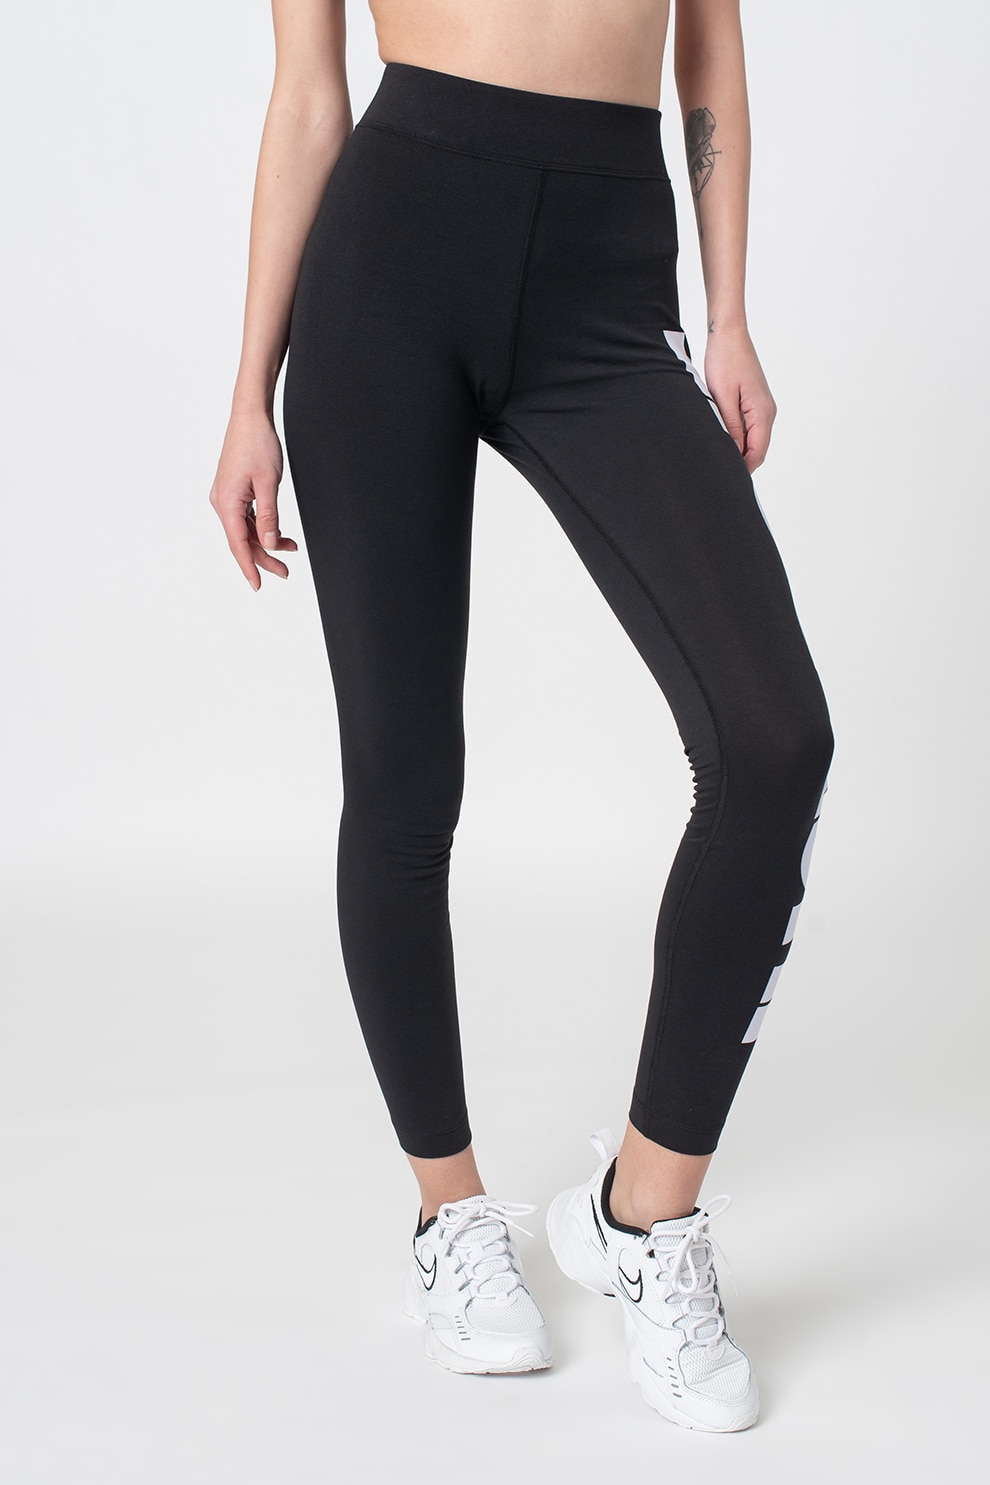 Legging Nike Sportswear para Fêmea - DJ4130